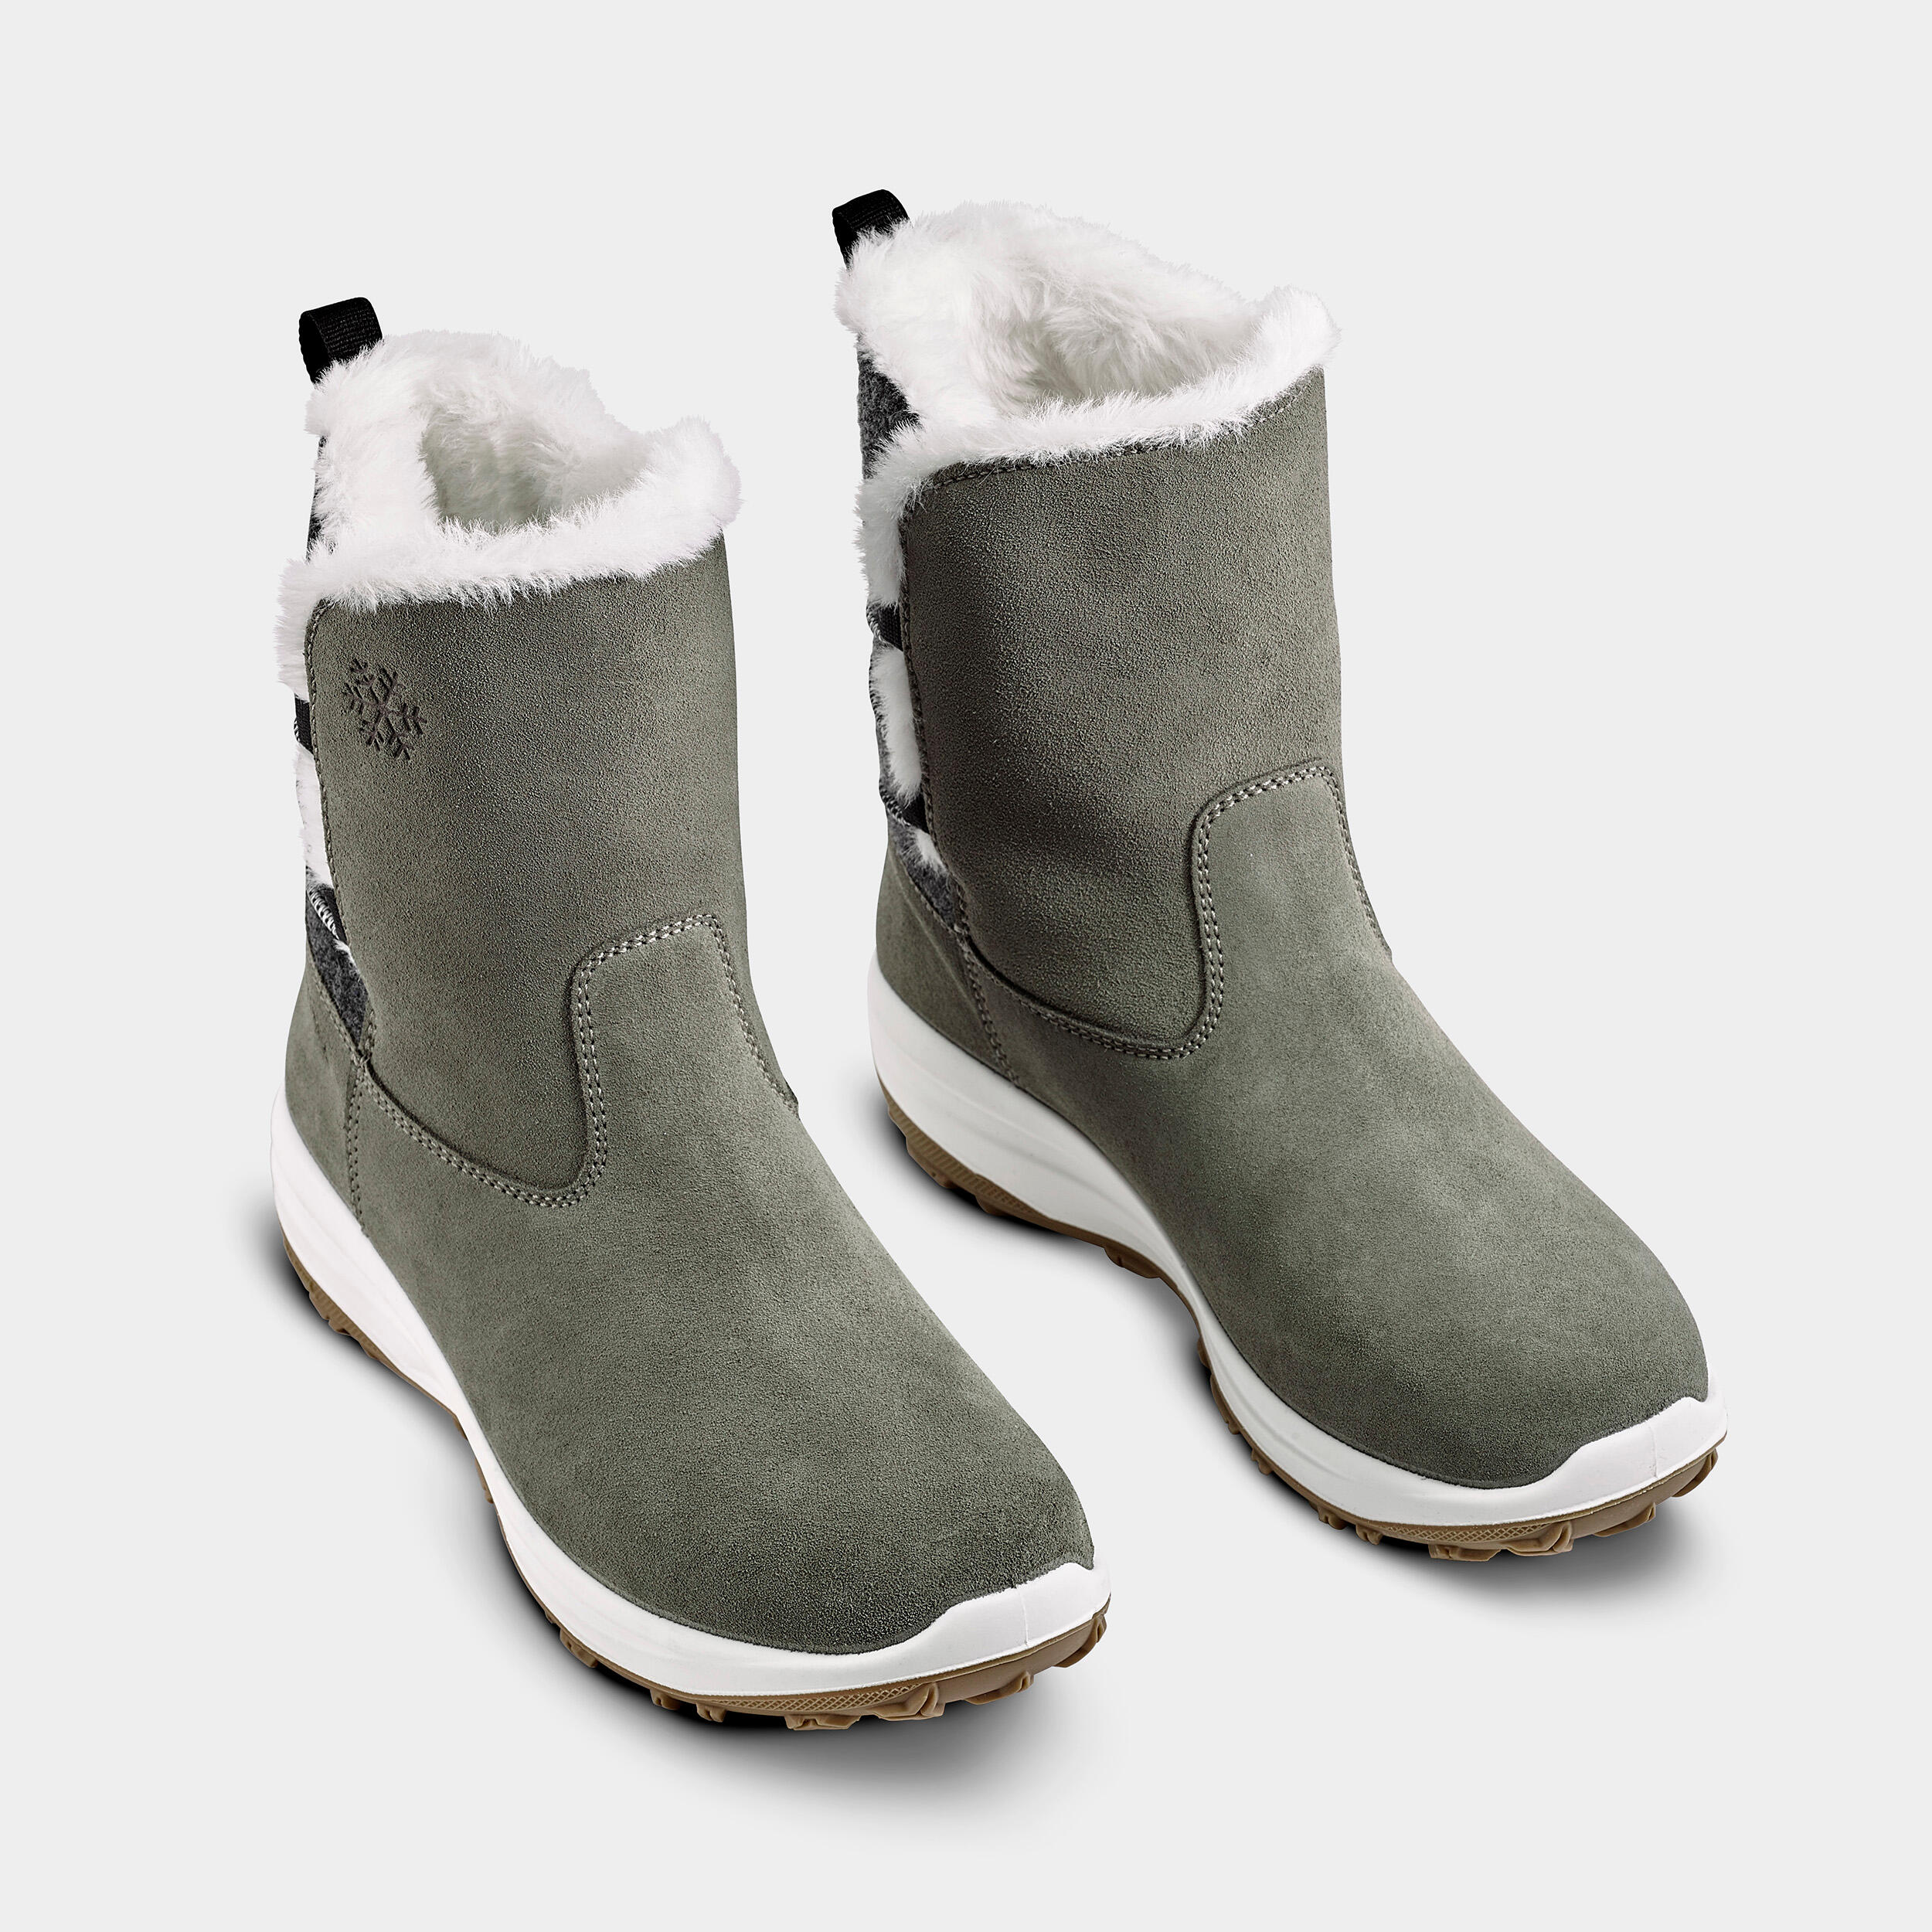 Women's warm waterproof snow hiking boots - SH500 leather 5/7